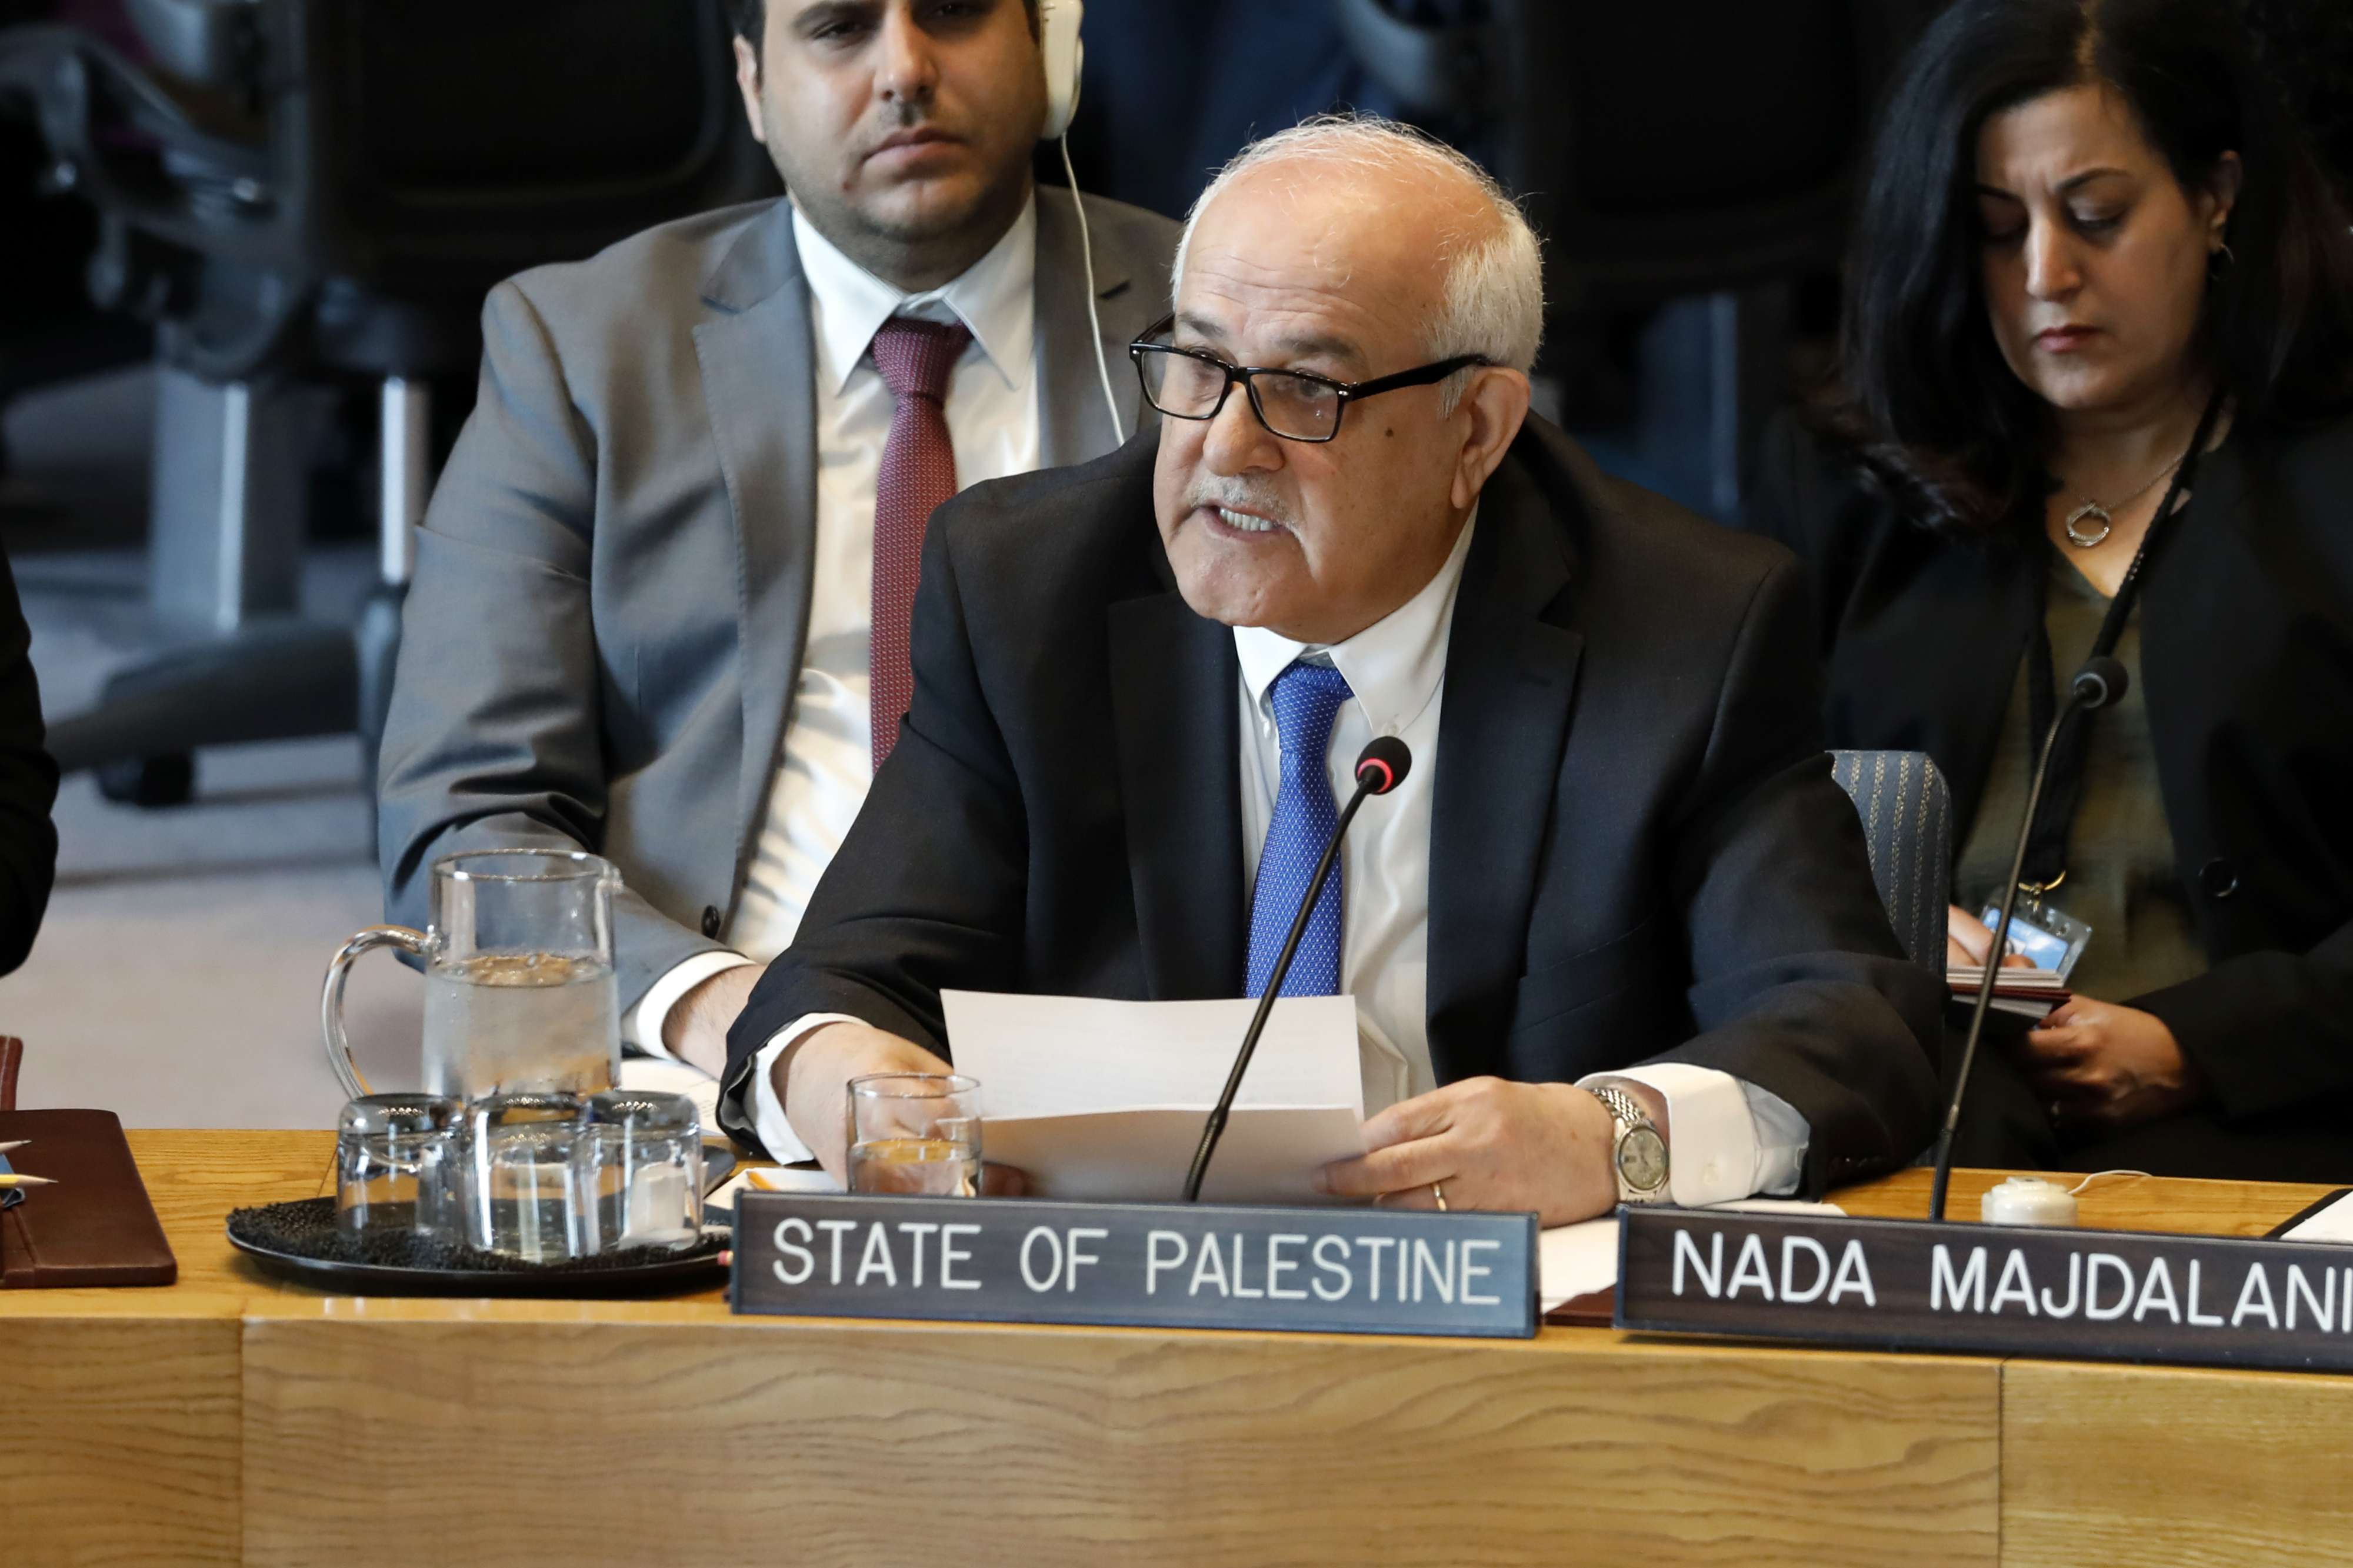 Palestinian Ambassador to the United Nations Riyad Mansour